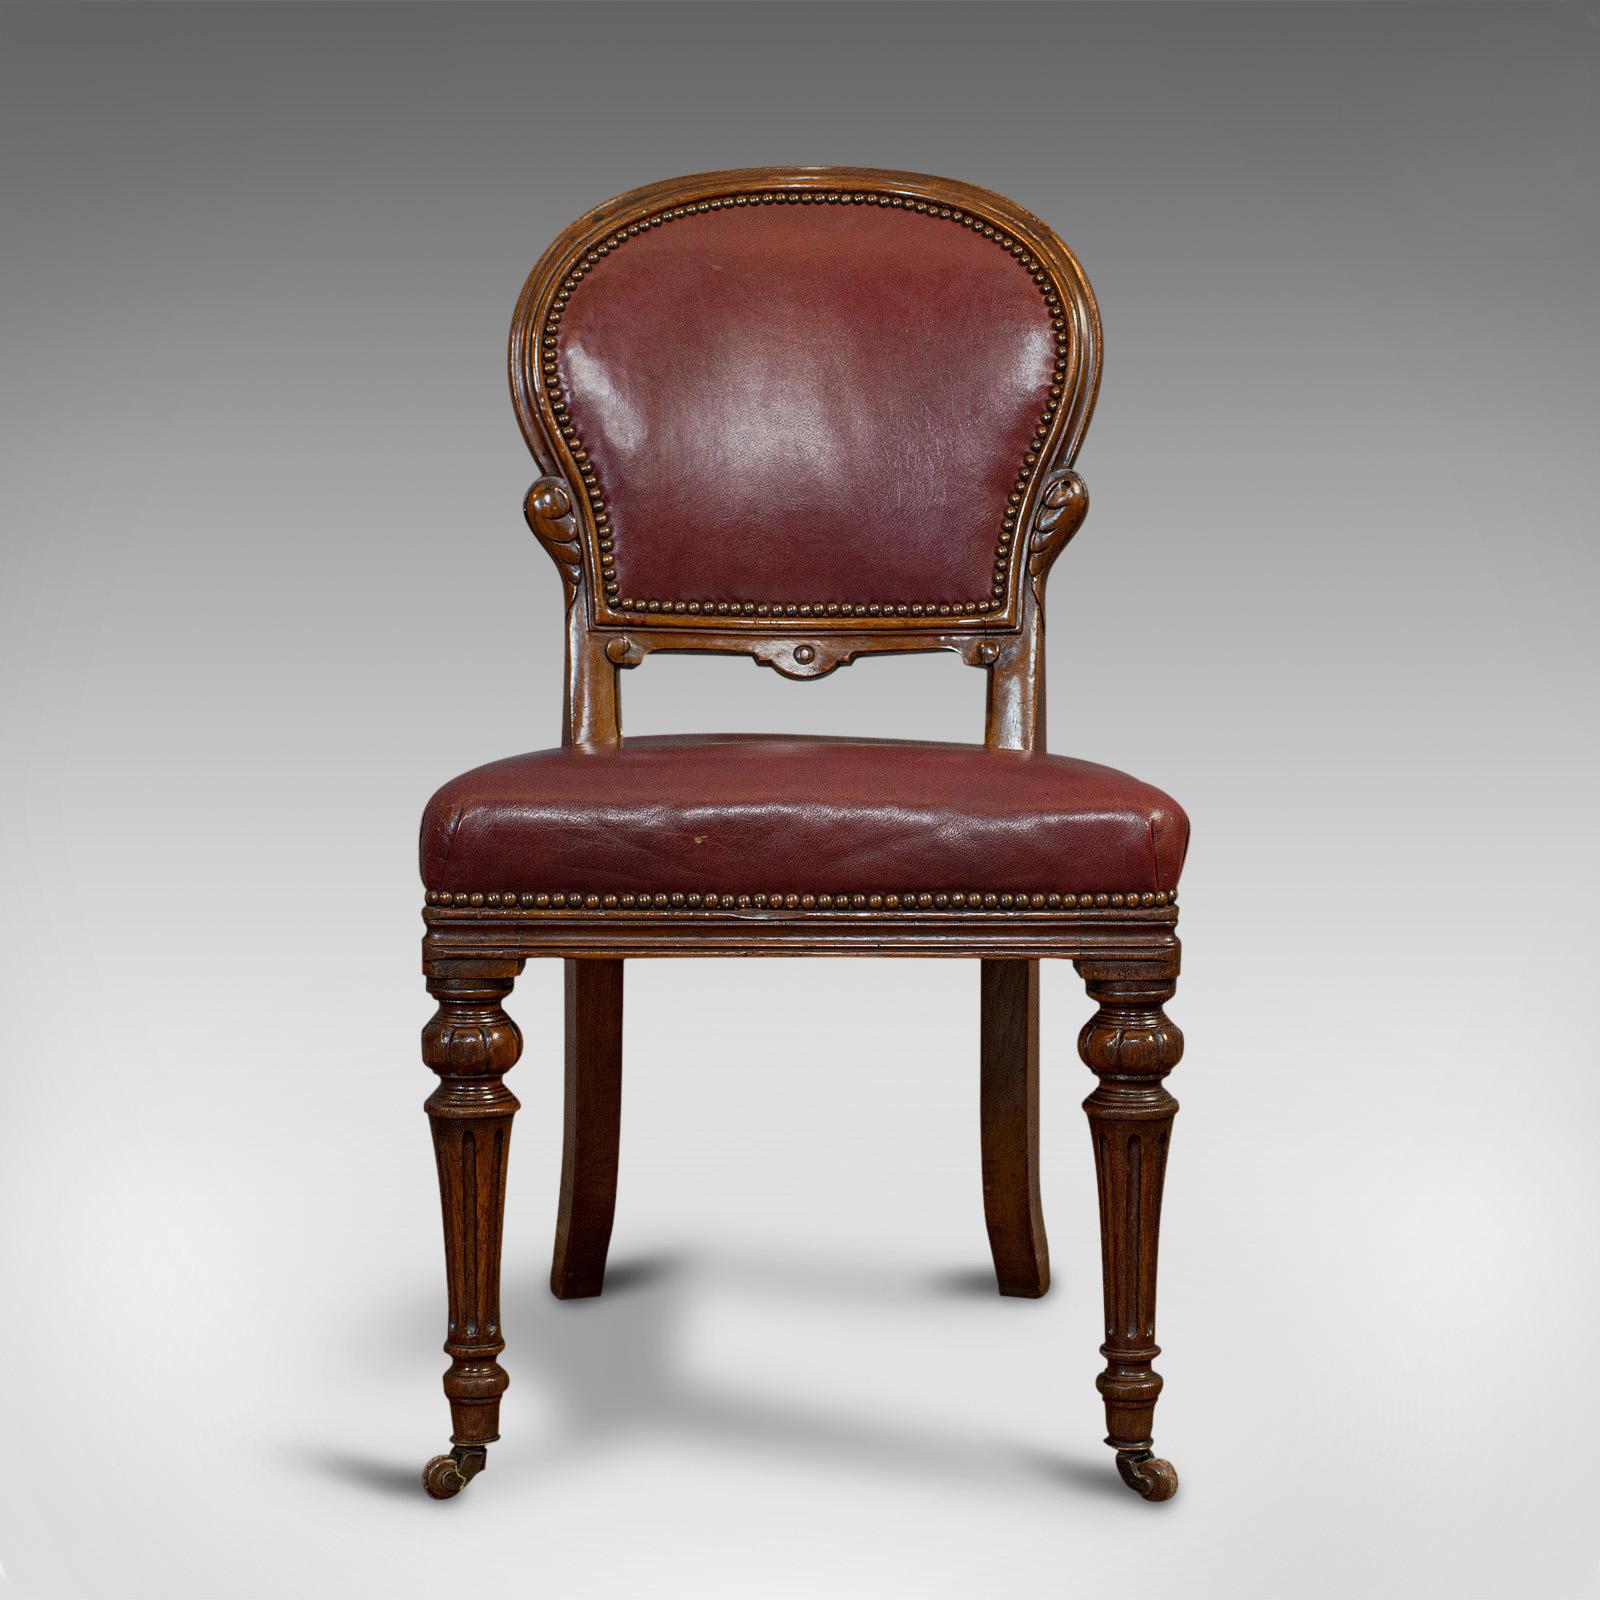 British Pair of Antique Chairs, Walnut, Leather, Seat, Doveston, Bird & Hull, Victorian